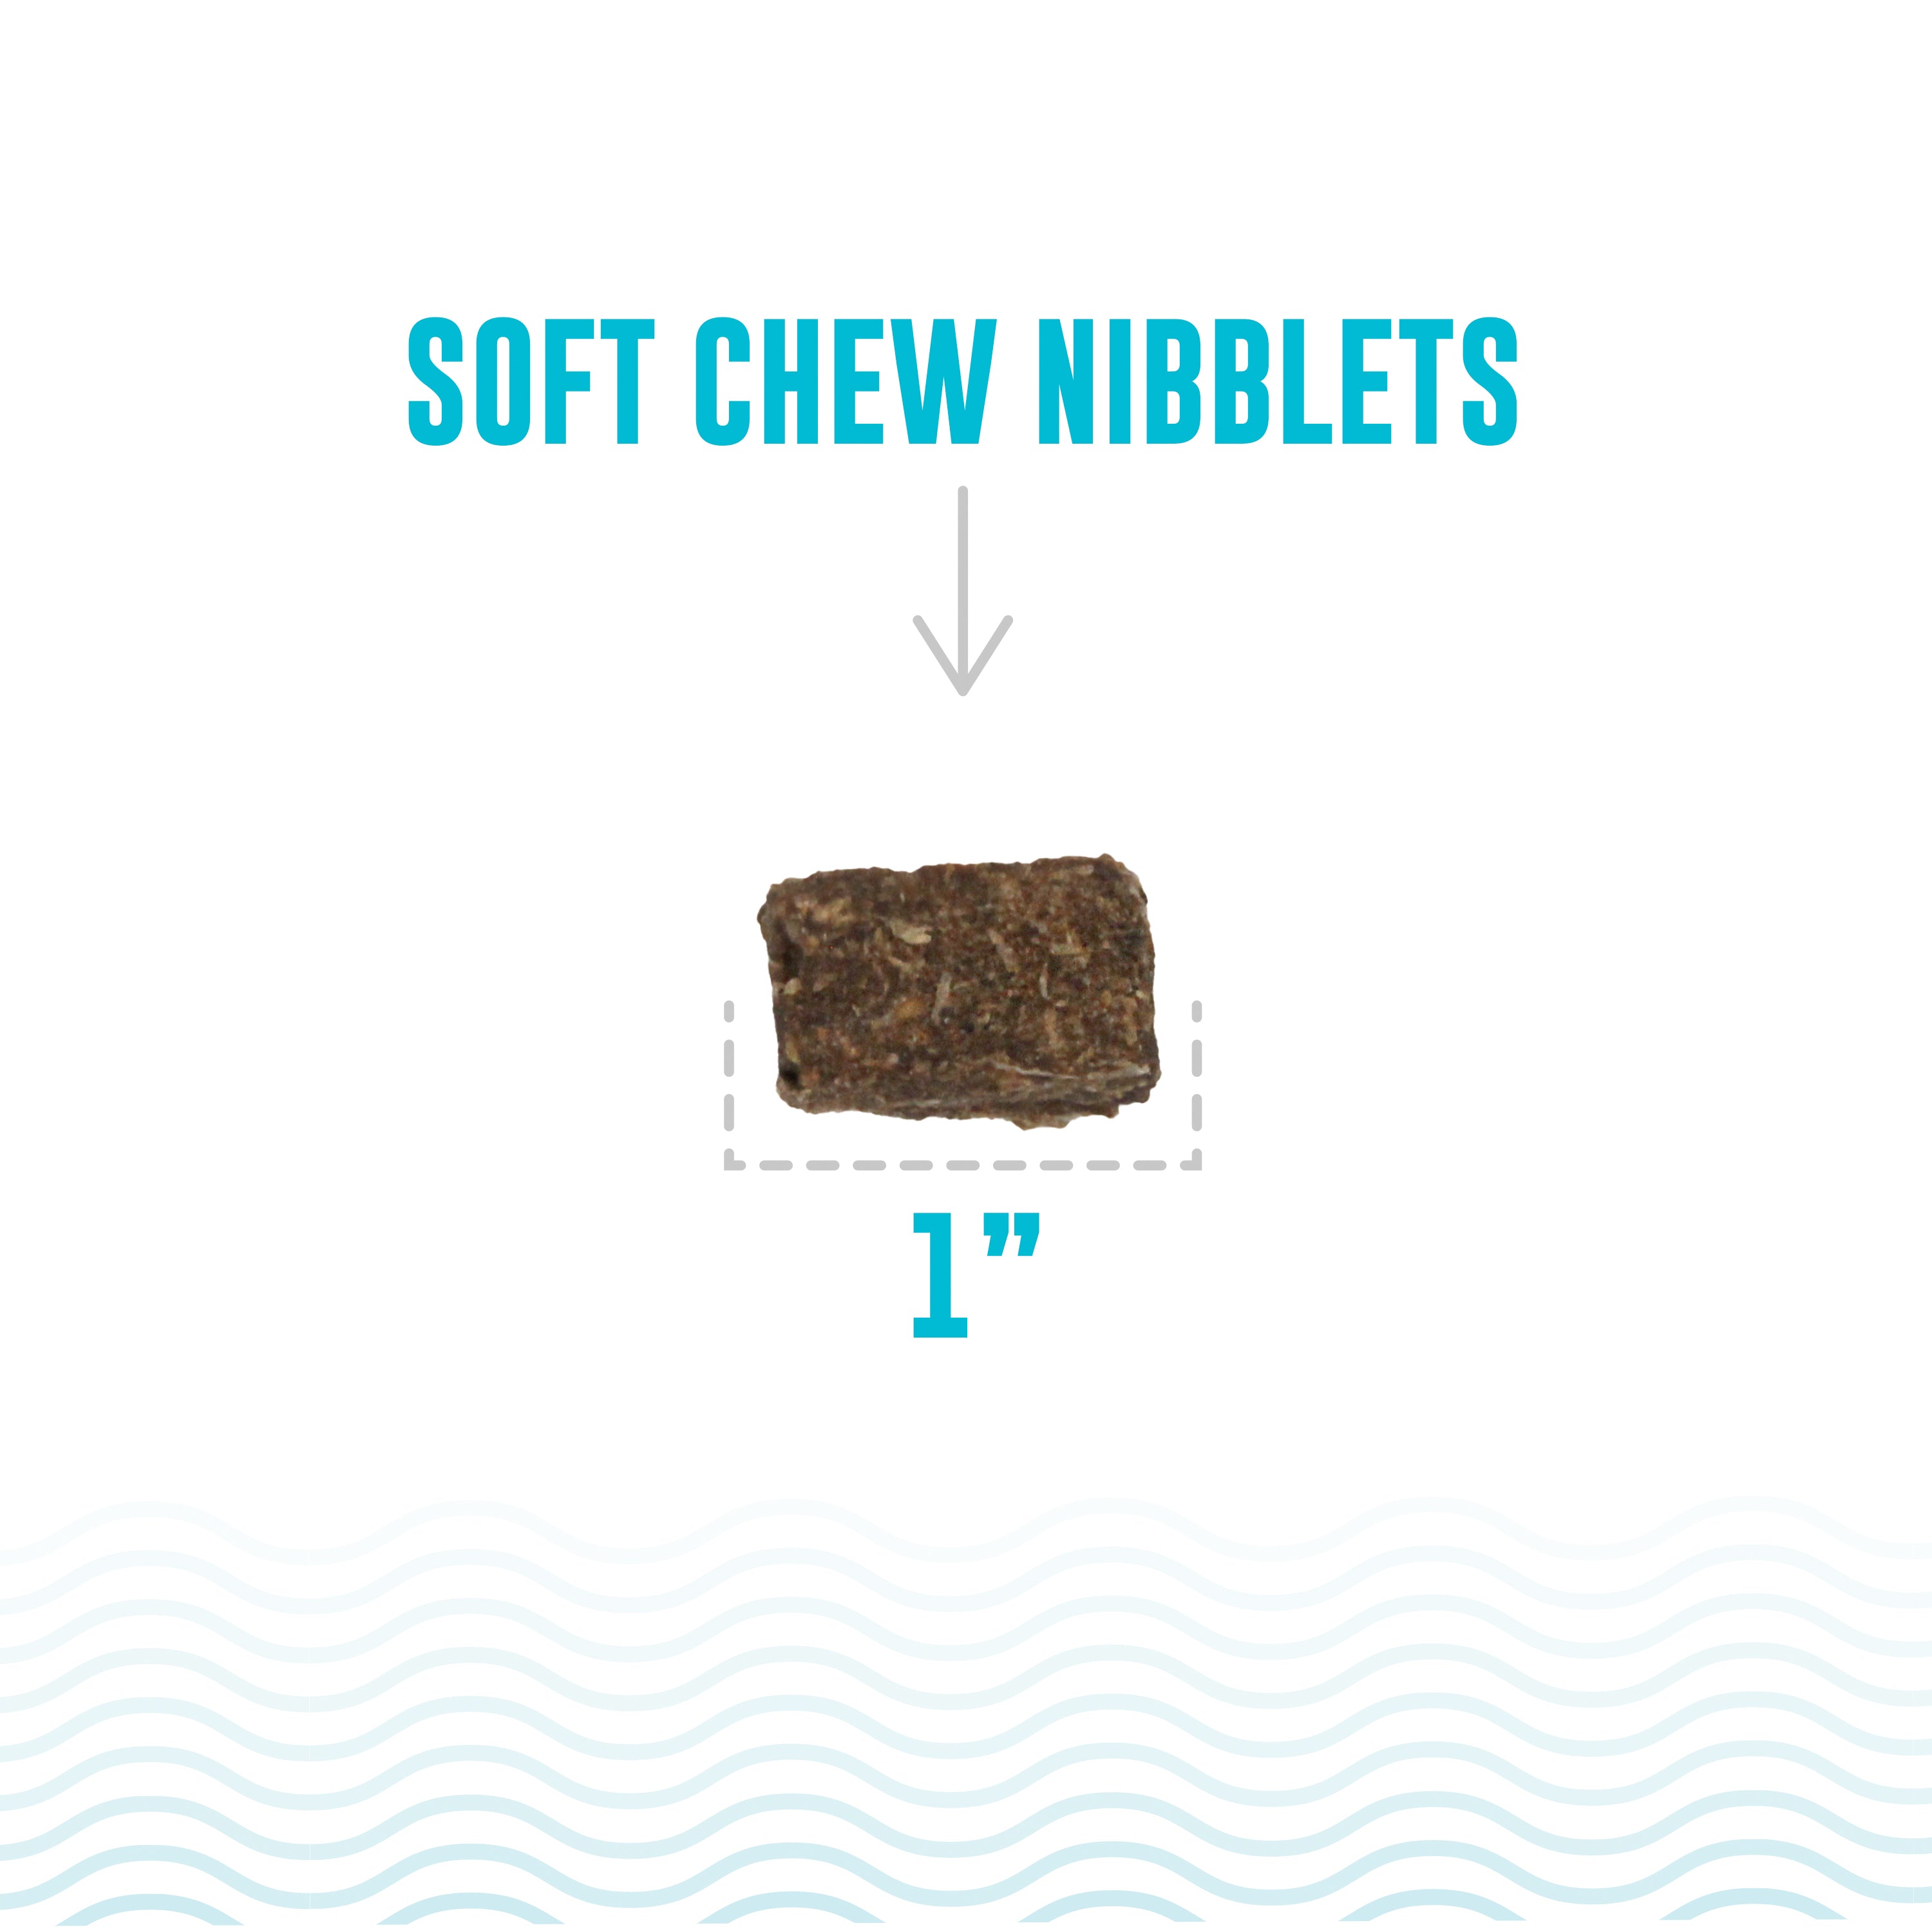 Icelandic+ Nibblets Arctic Chaar & Kelp Recipe Soft Dog Treats, 2.25oz